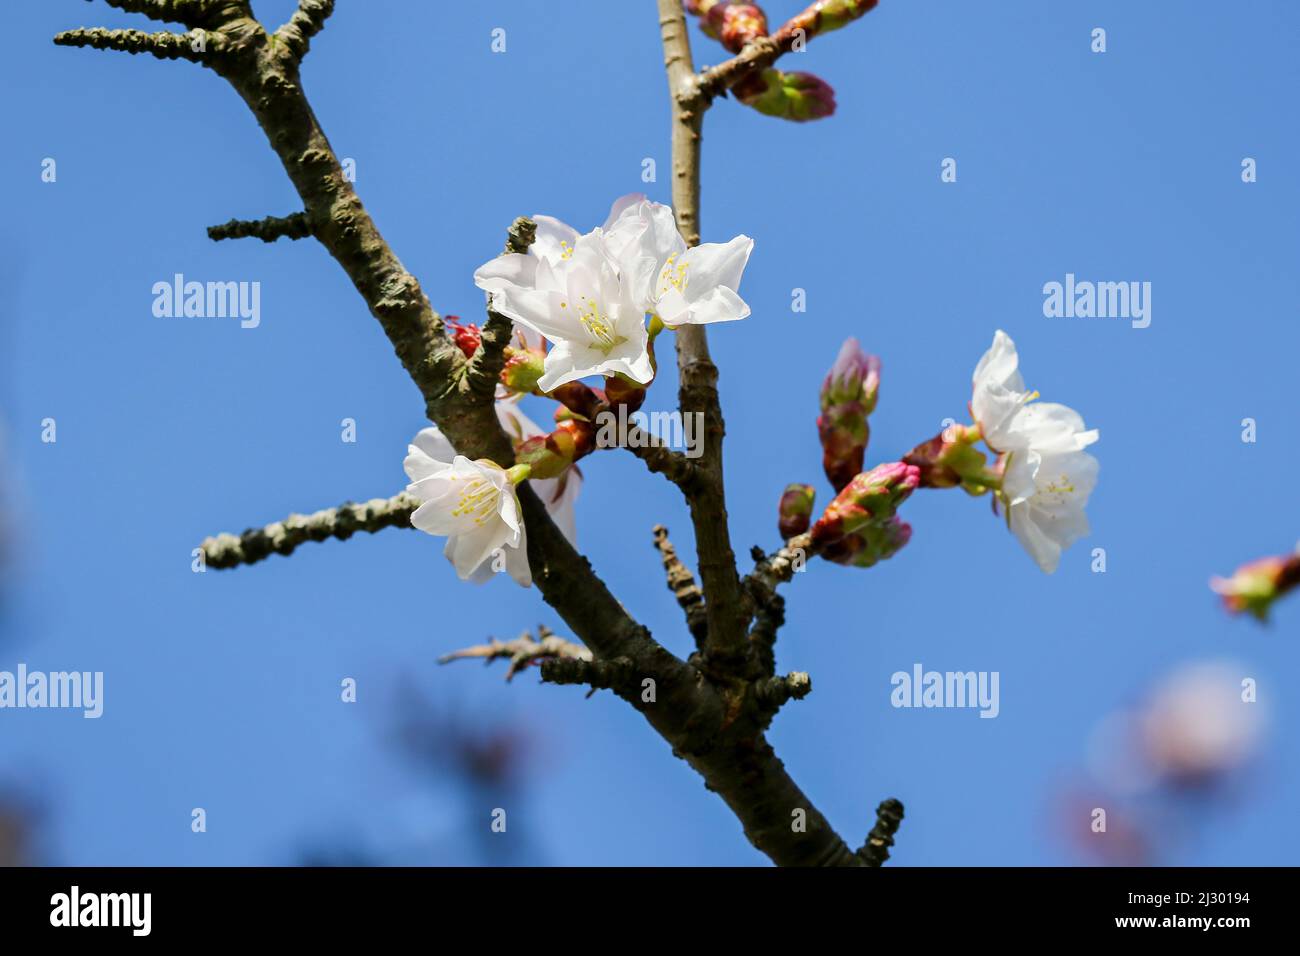 Closeup of Spring buds, fresh blossom budding on branch of 'Spreading Plum' tree (Prunus divaricata). Blue sky. Dublin, Ireland Stock Photo